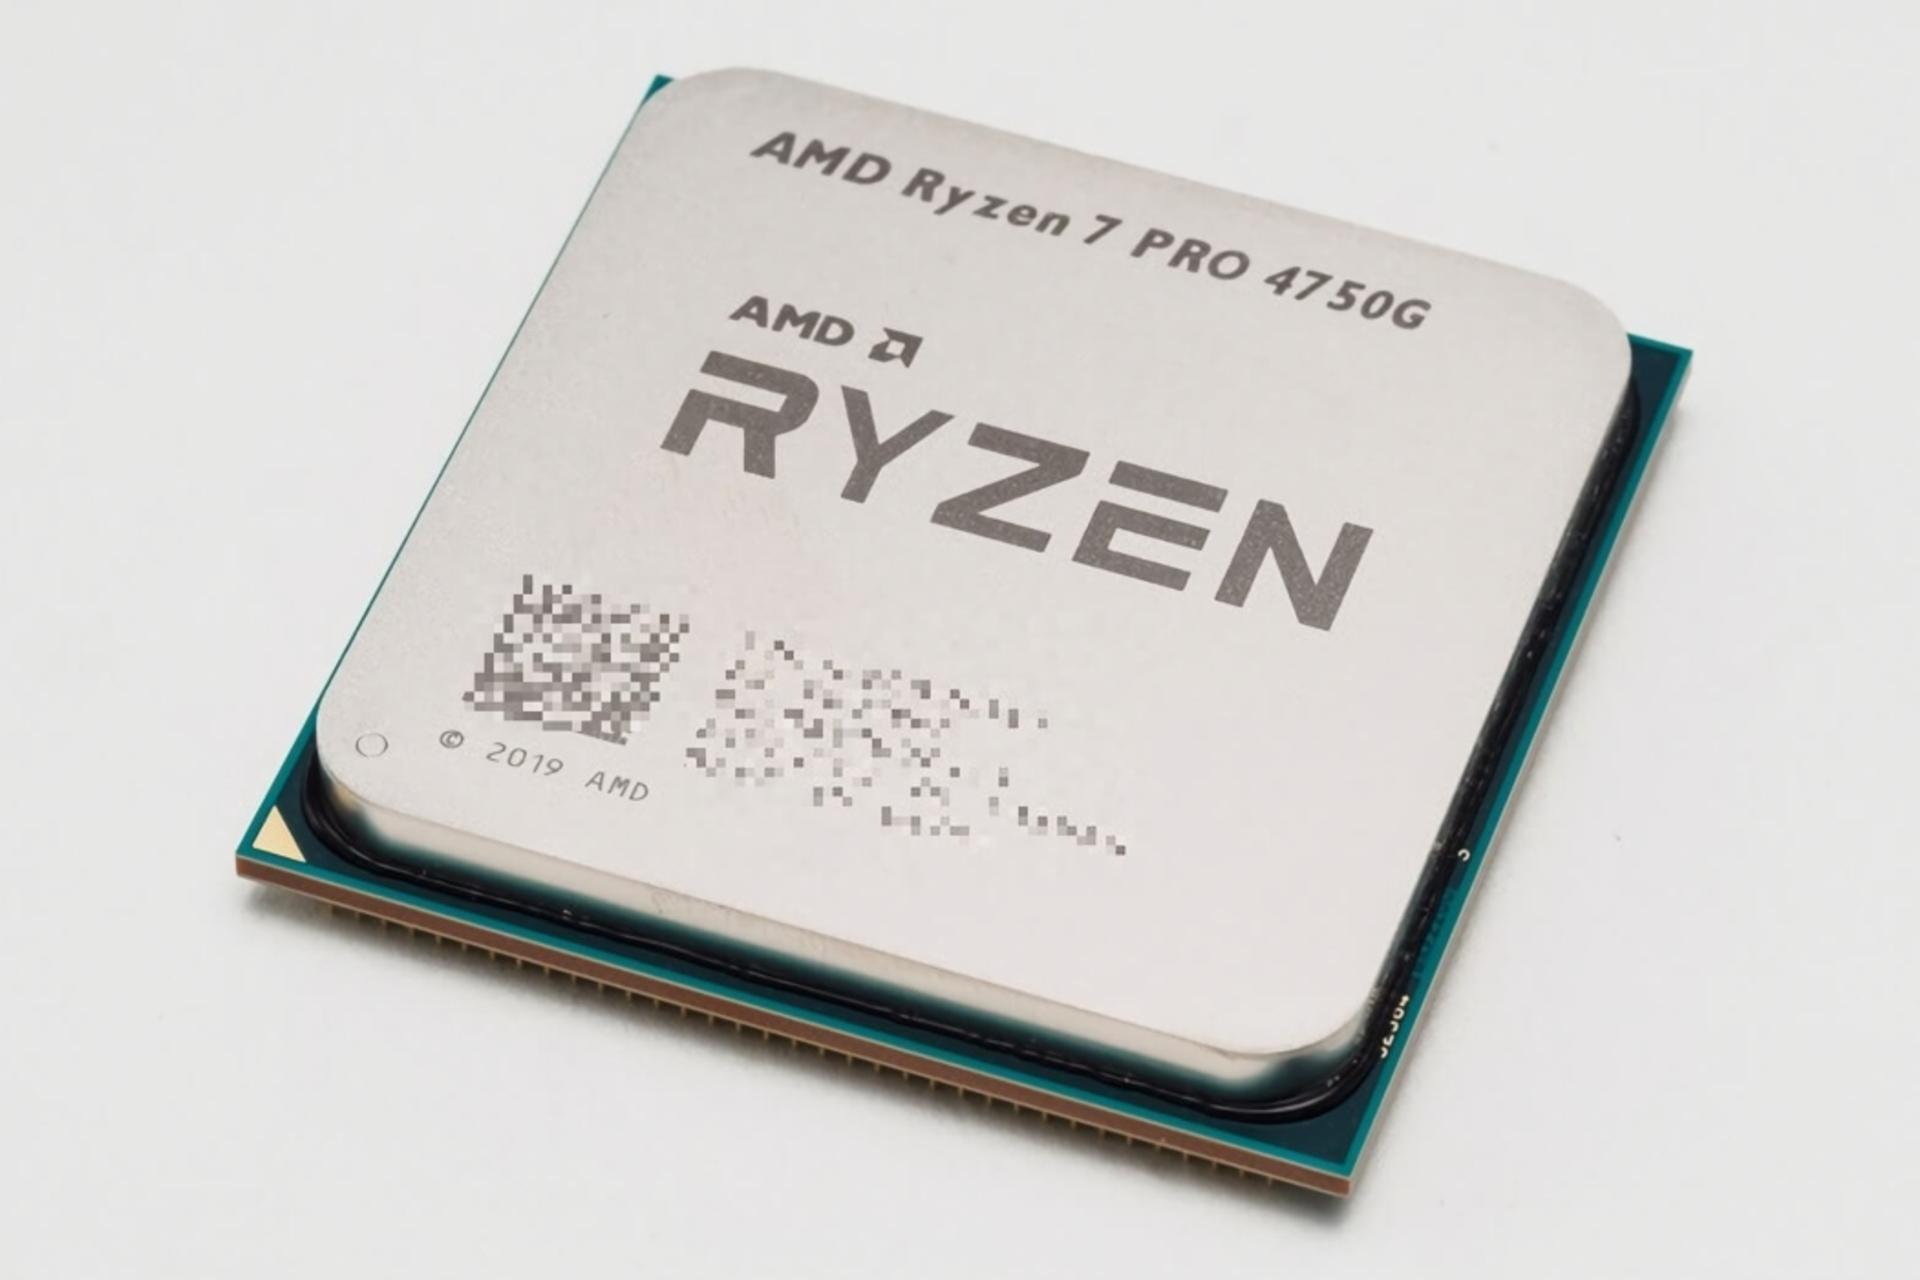 پردازنده AMD رایزن 7 پرو AMD Ryzen 7 PRO 4750G